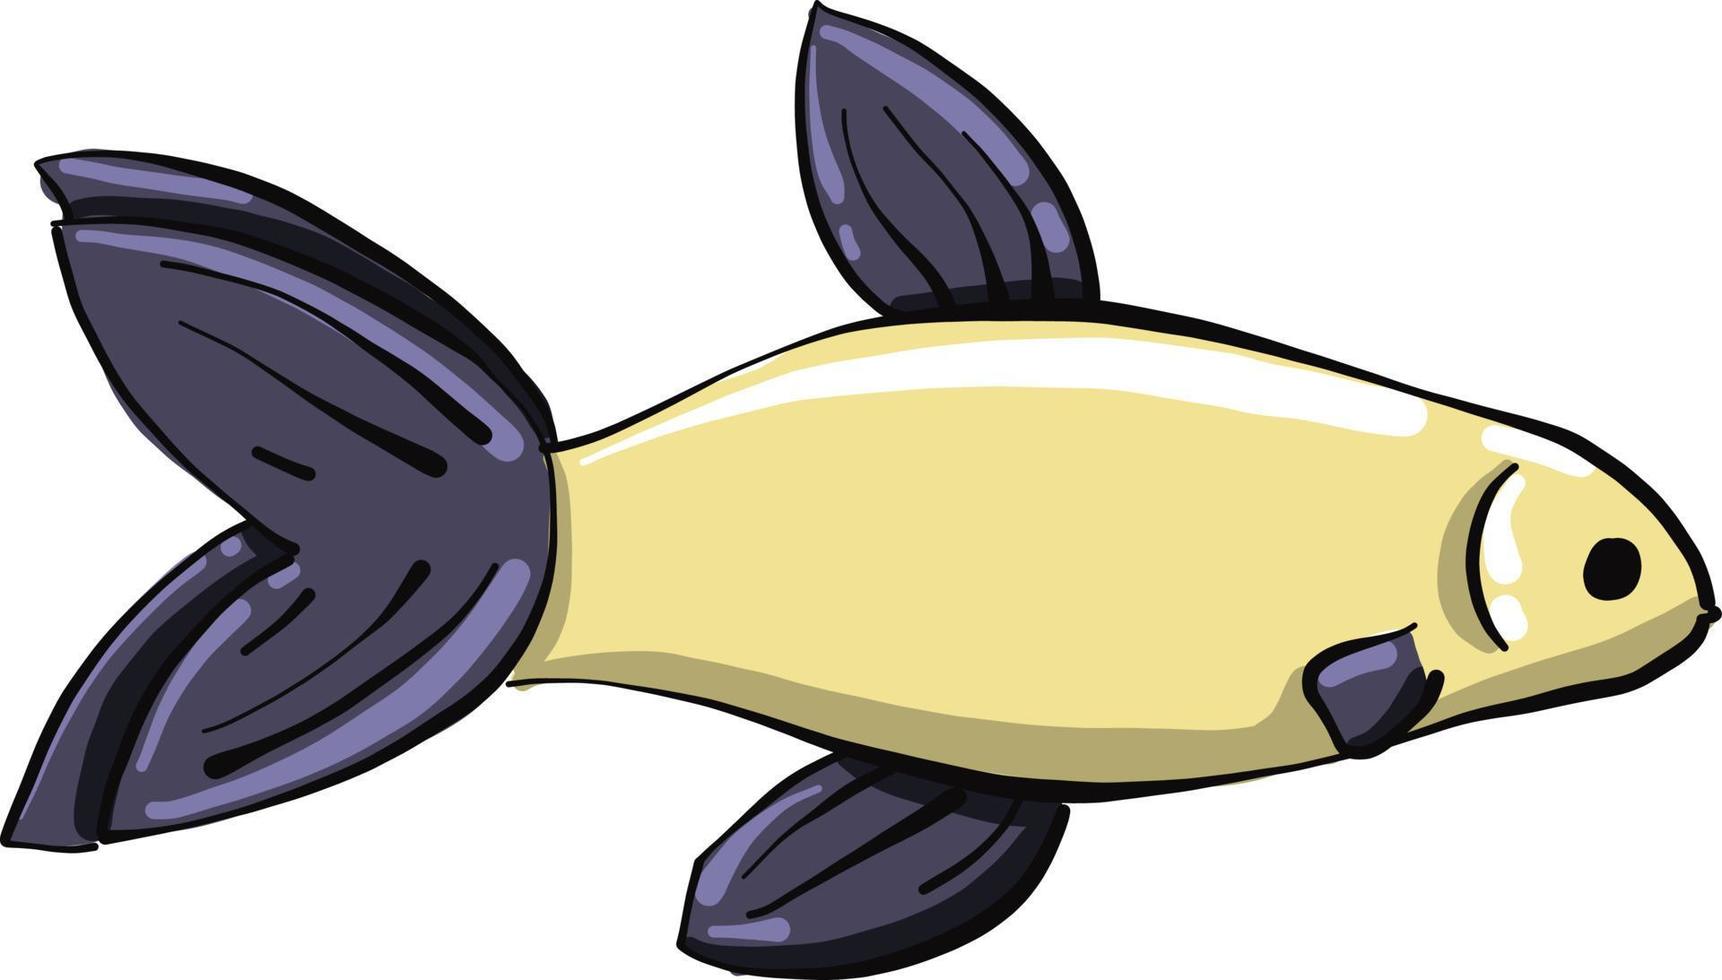 Big yellow fish, illustration, vector on white background.